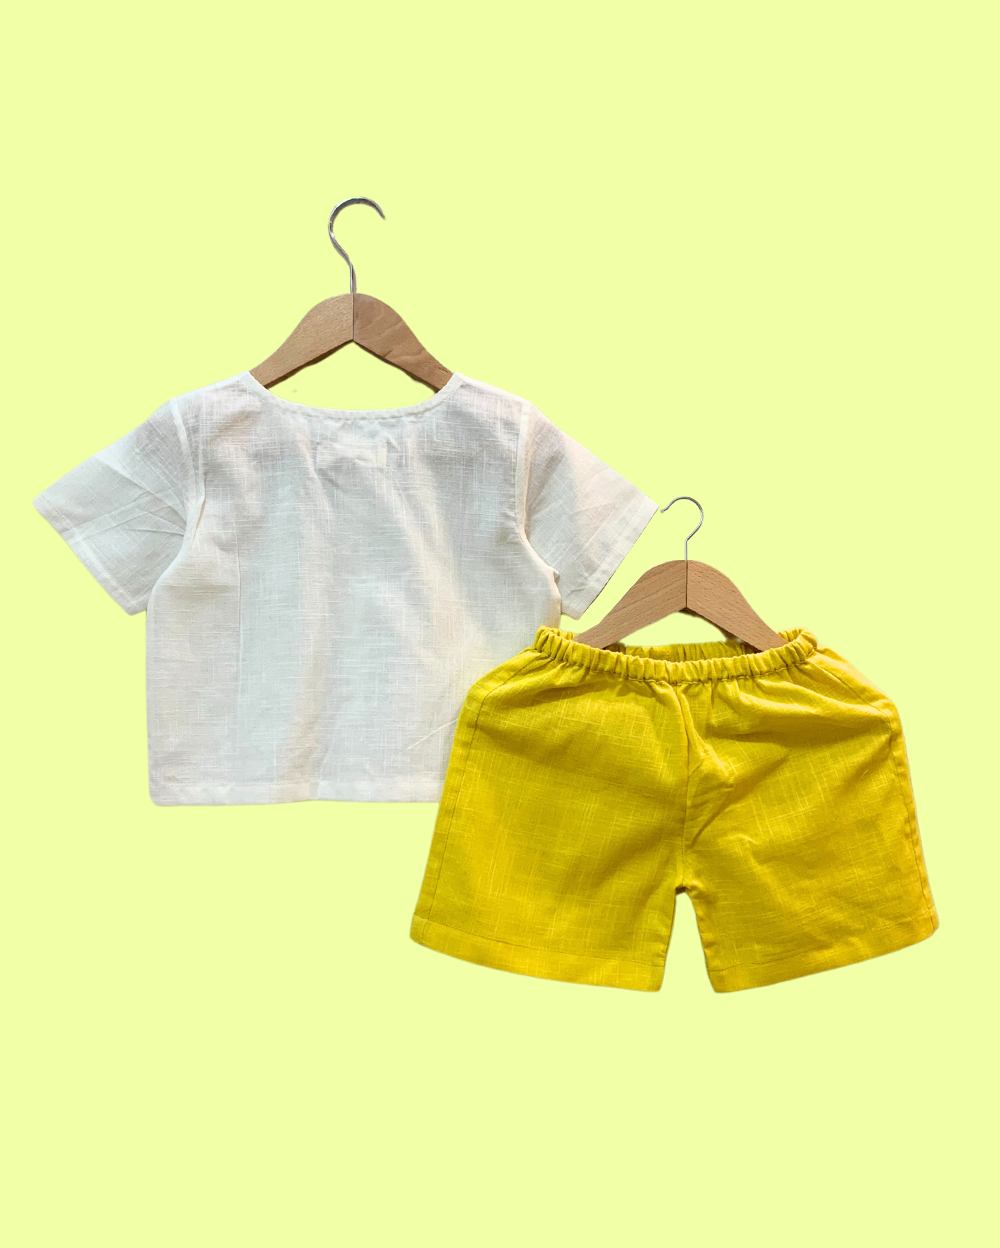 100% Natural Cotton Onesie & Baby Set for Babies - 2 Piece Set